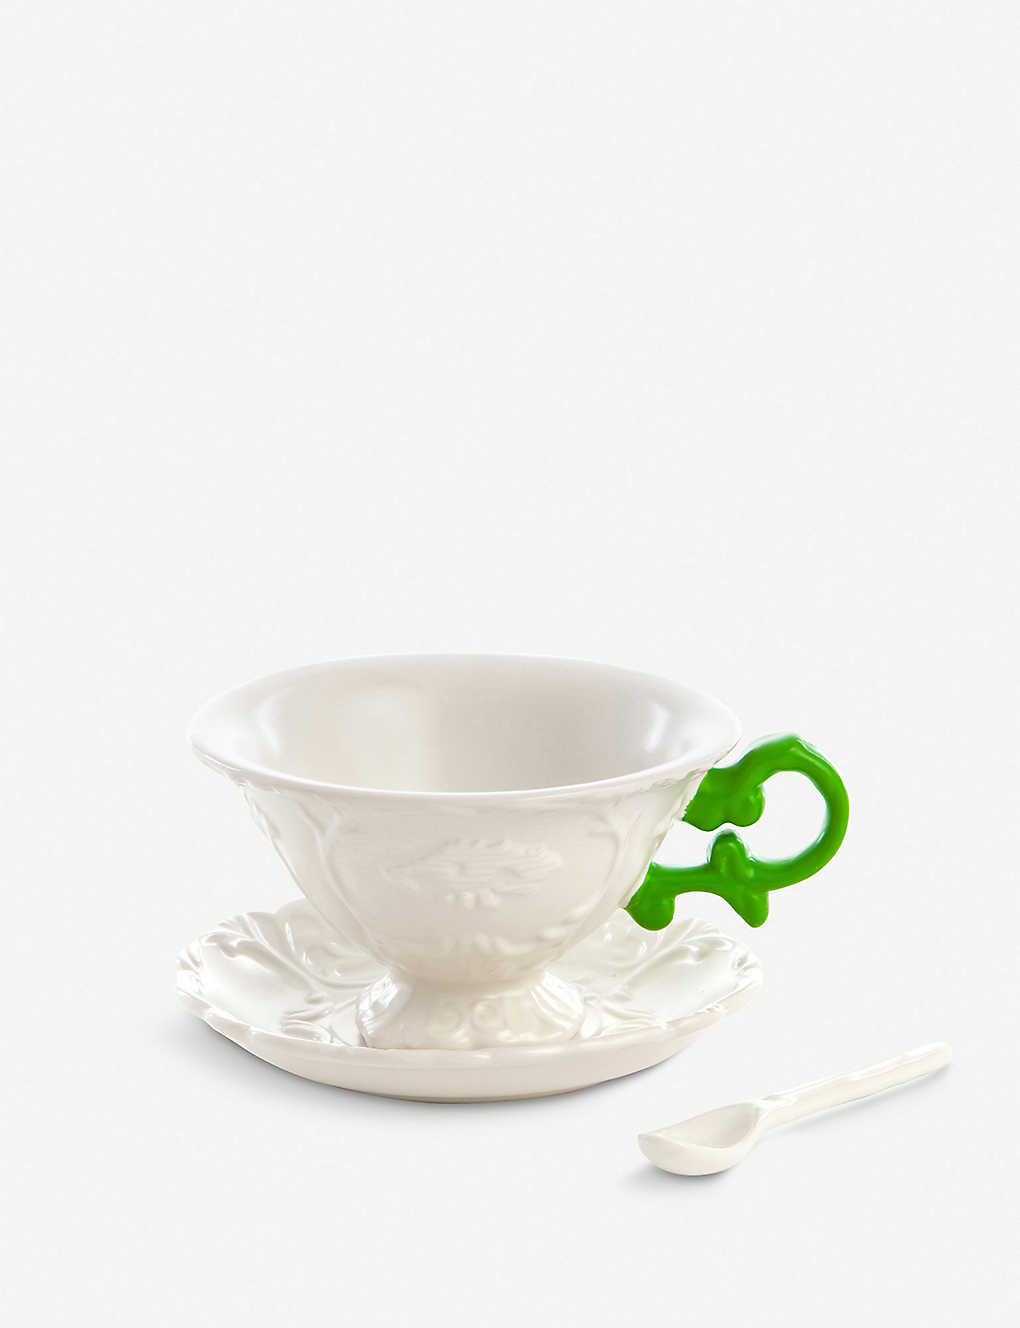 SELETTI アイウェアーズ ポーセレイン ティー カップ セット I-Wares porcelain tea cup set